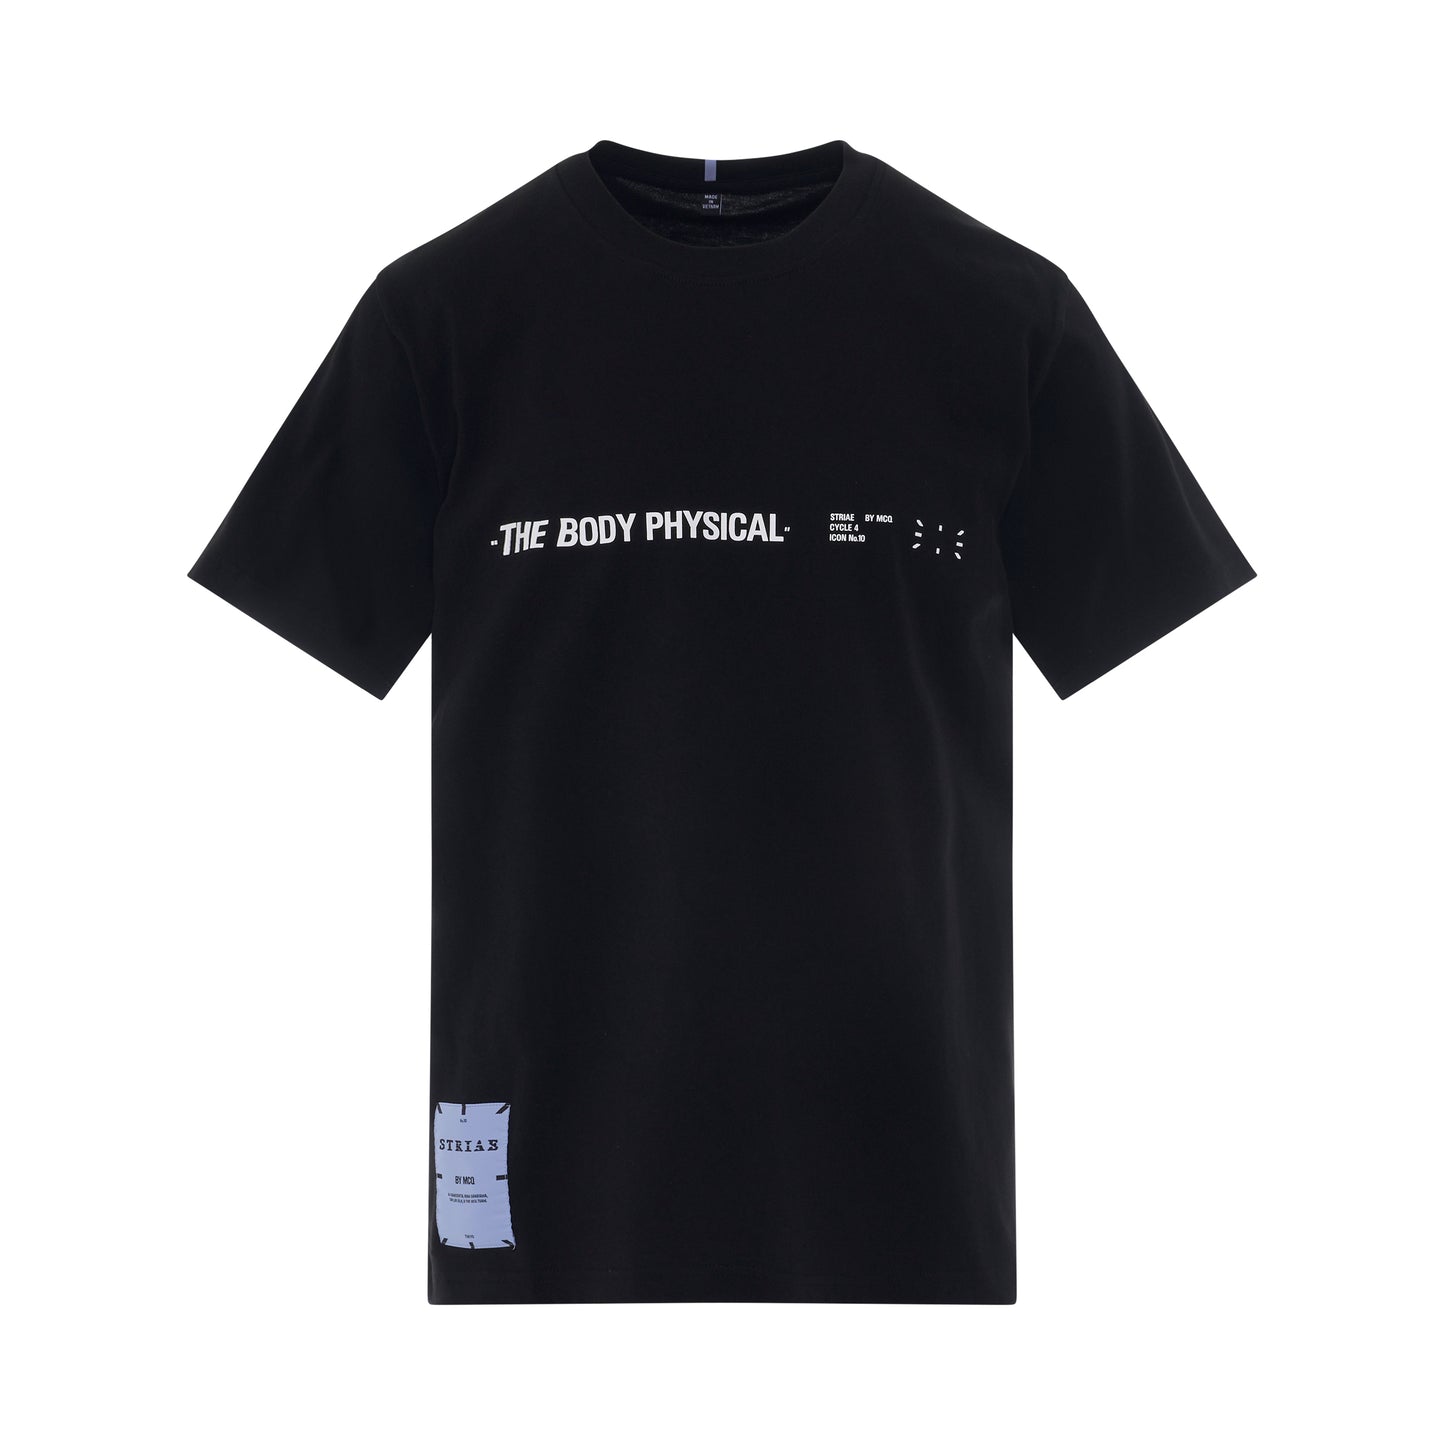 Striae Manifesto T-Shirt in Black